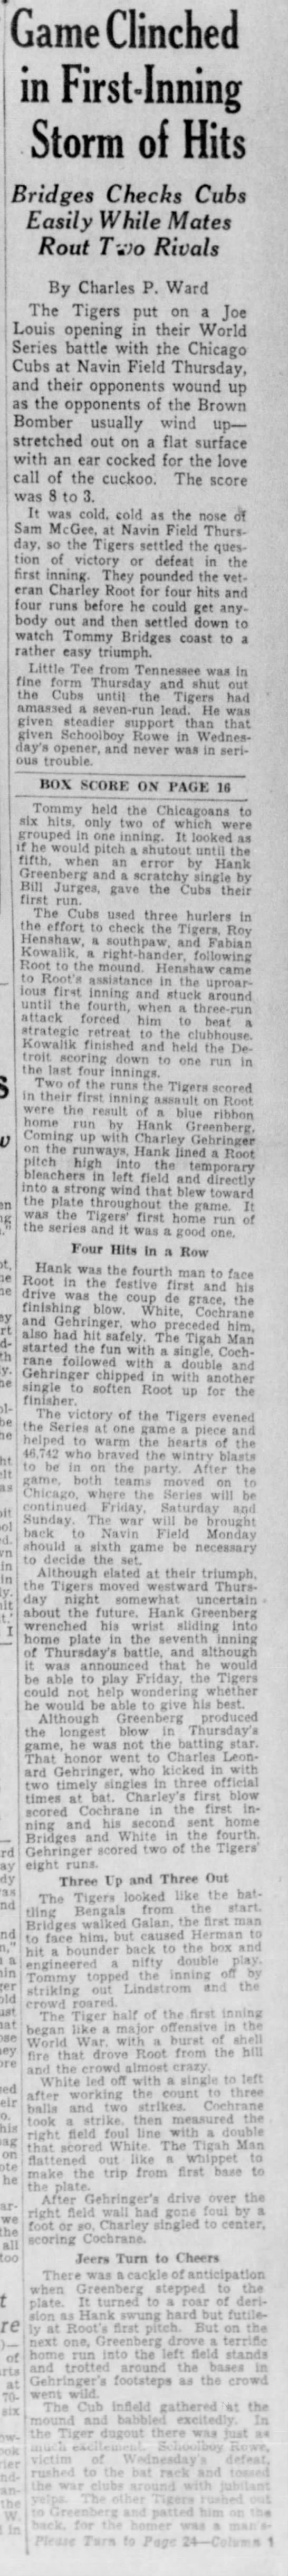 Fri 10/4/1935: WS Gm 2 - first inning rally - 